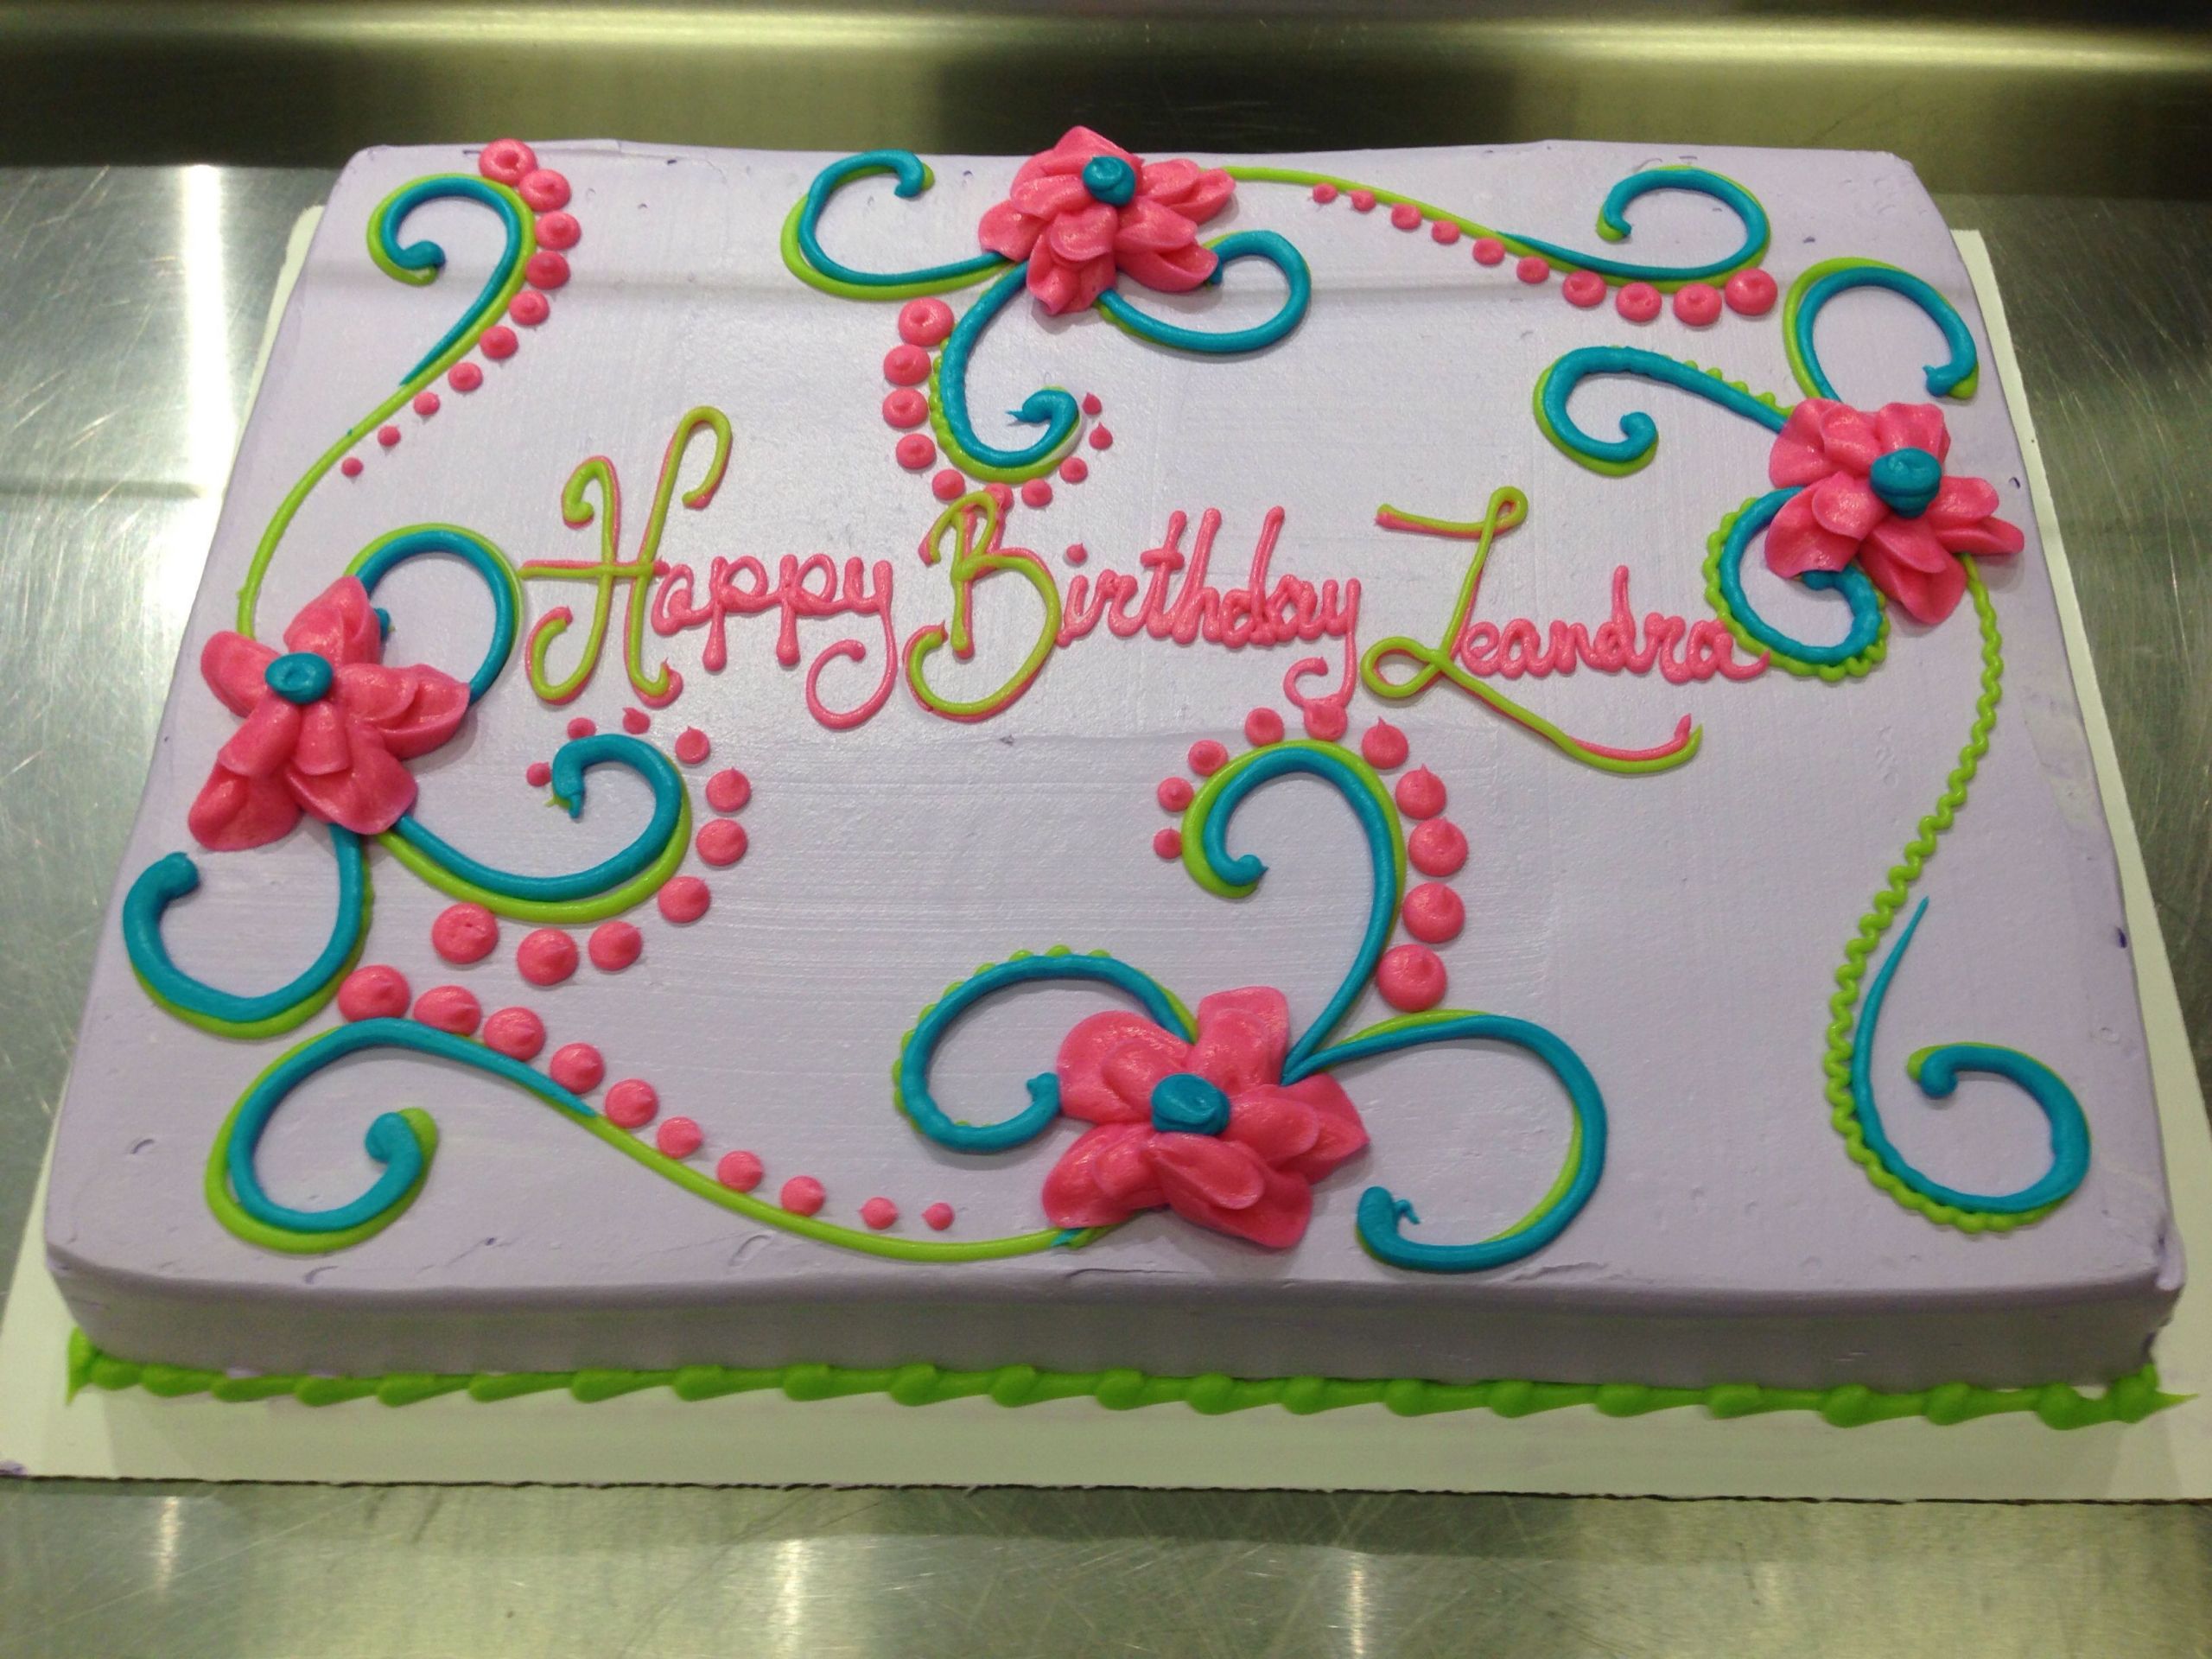 Birthday Sheet Cake Ideas
 Scrolls and flowers girly birthday cake